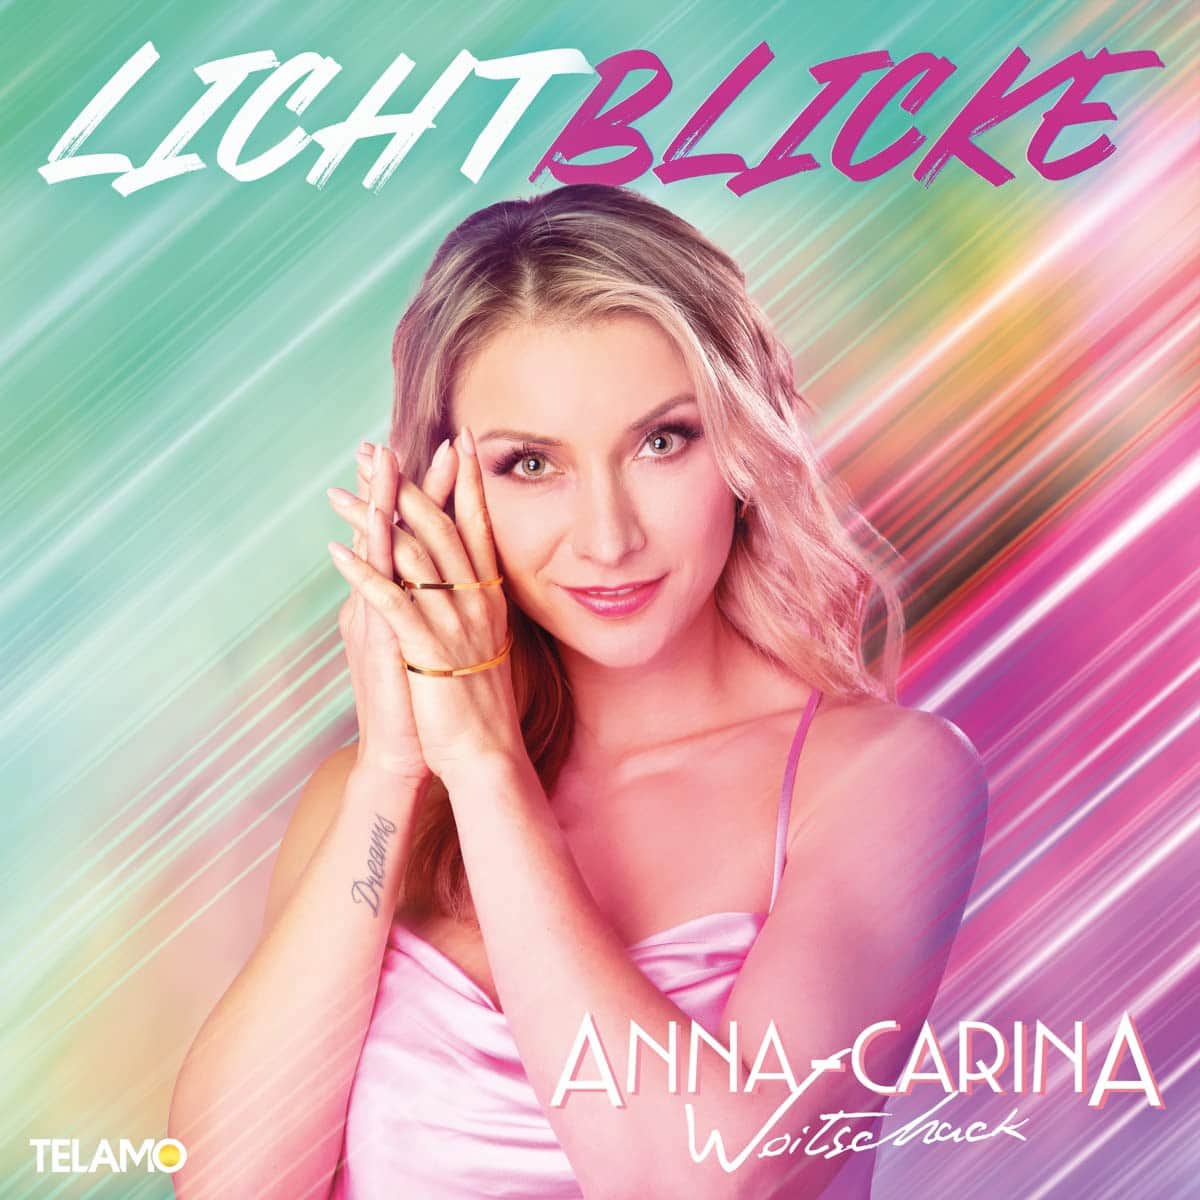 Anna-Carina Woitschack CD "Lichtblicke" 2022